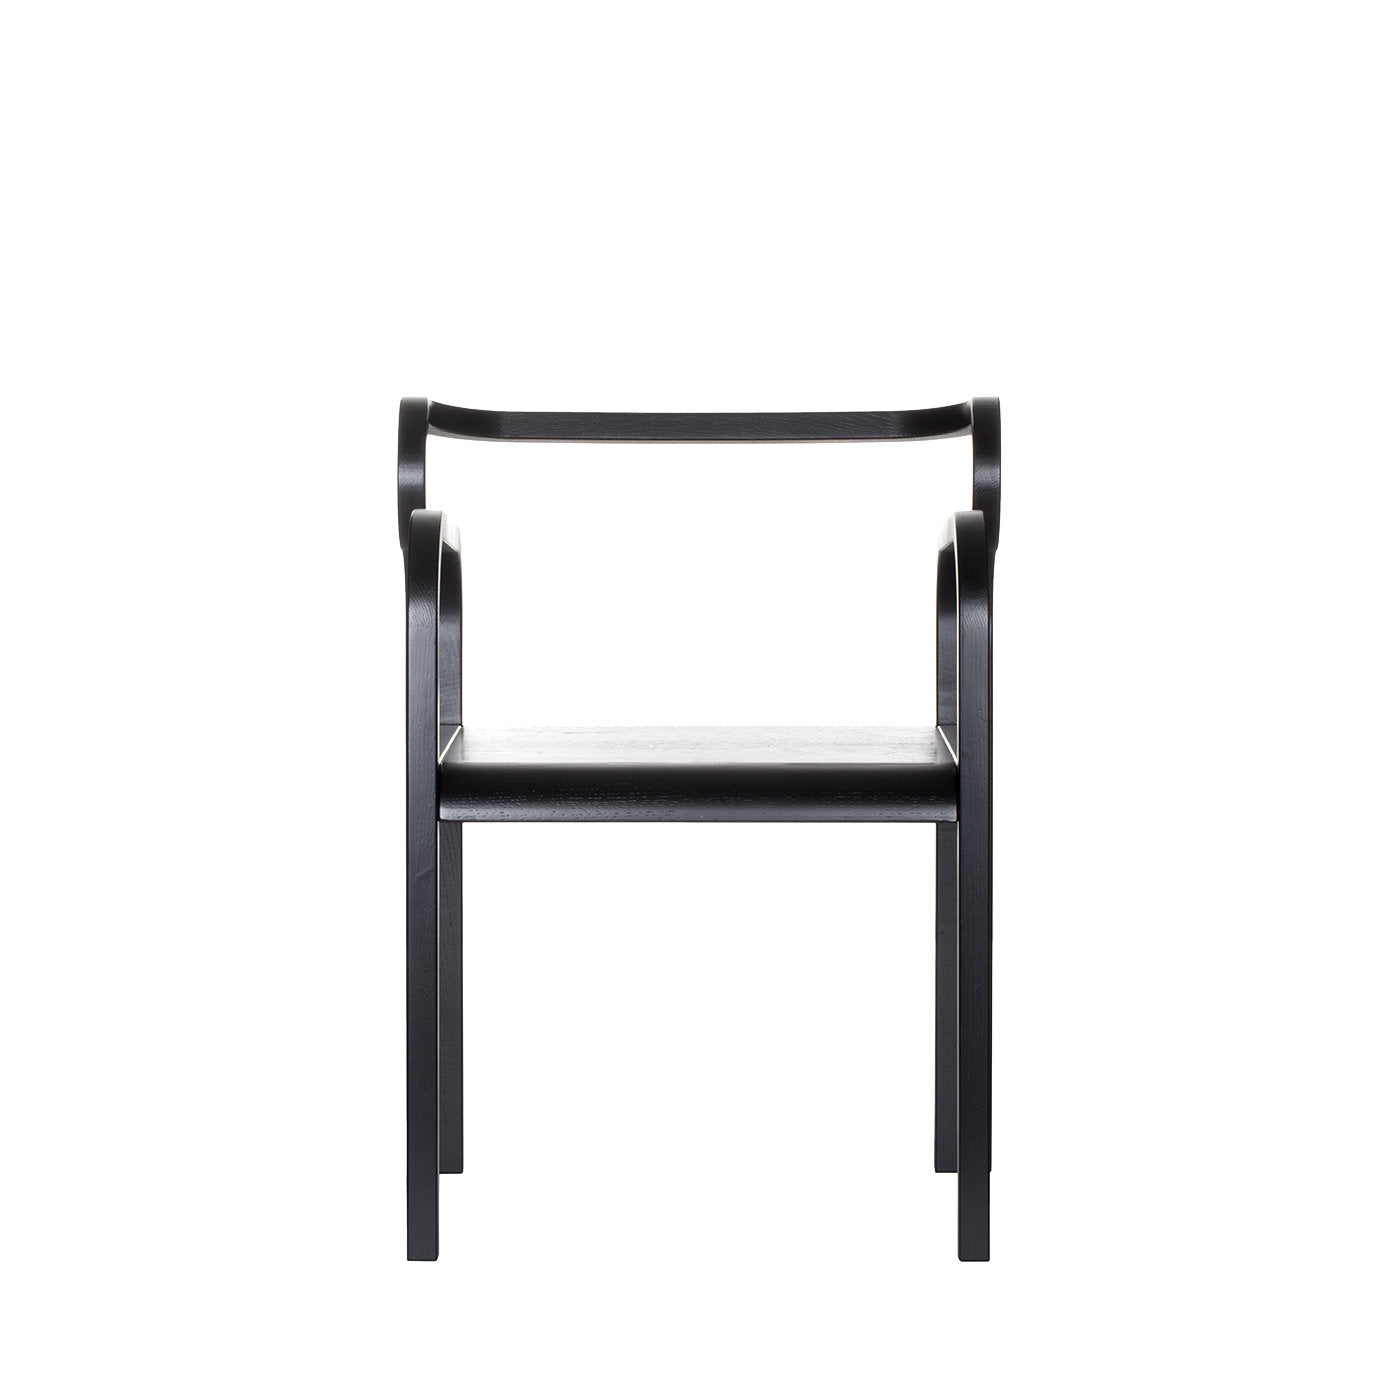 Odette Chair in Black - Alternative view 1